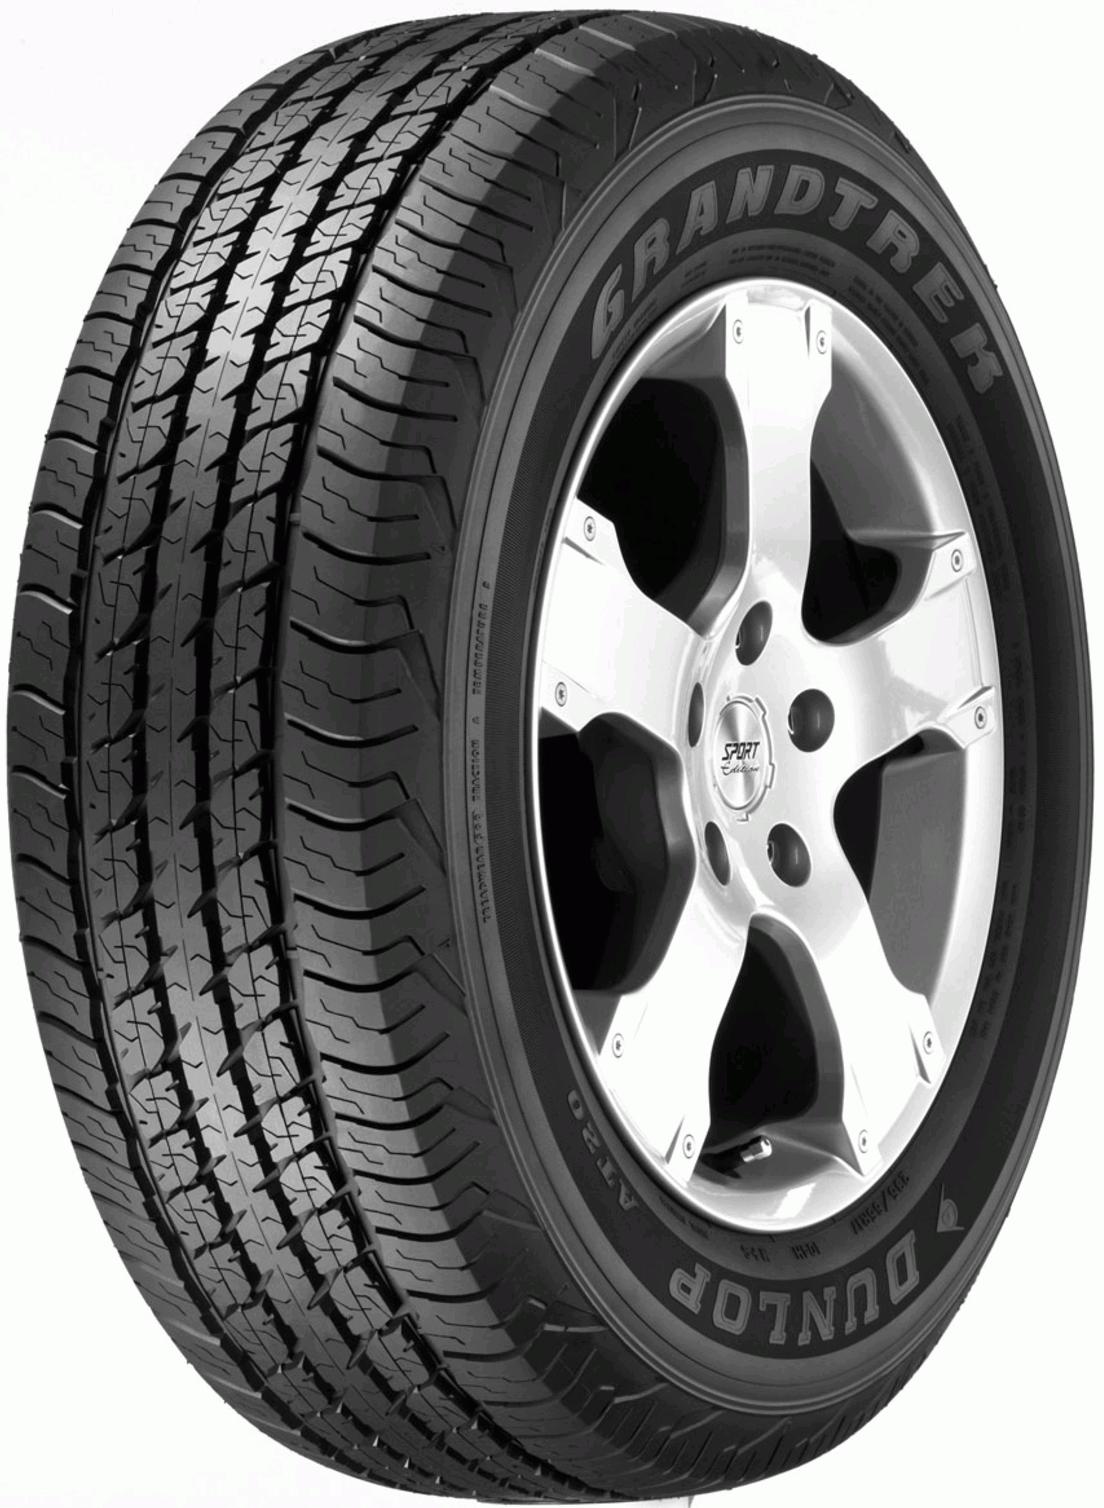 https://www.tyrereviews.com/images/tyres/Dunlop-Grandtrek-AT20.jpg